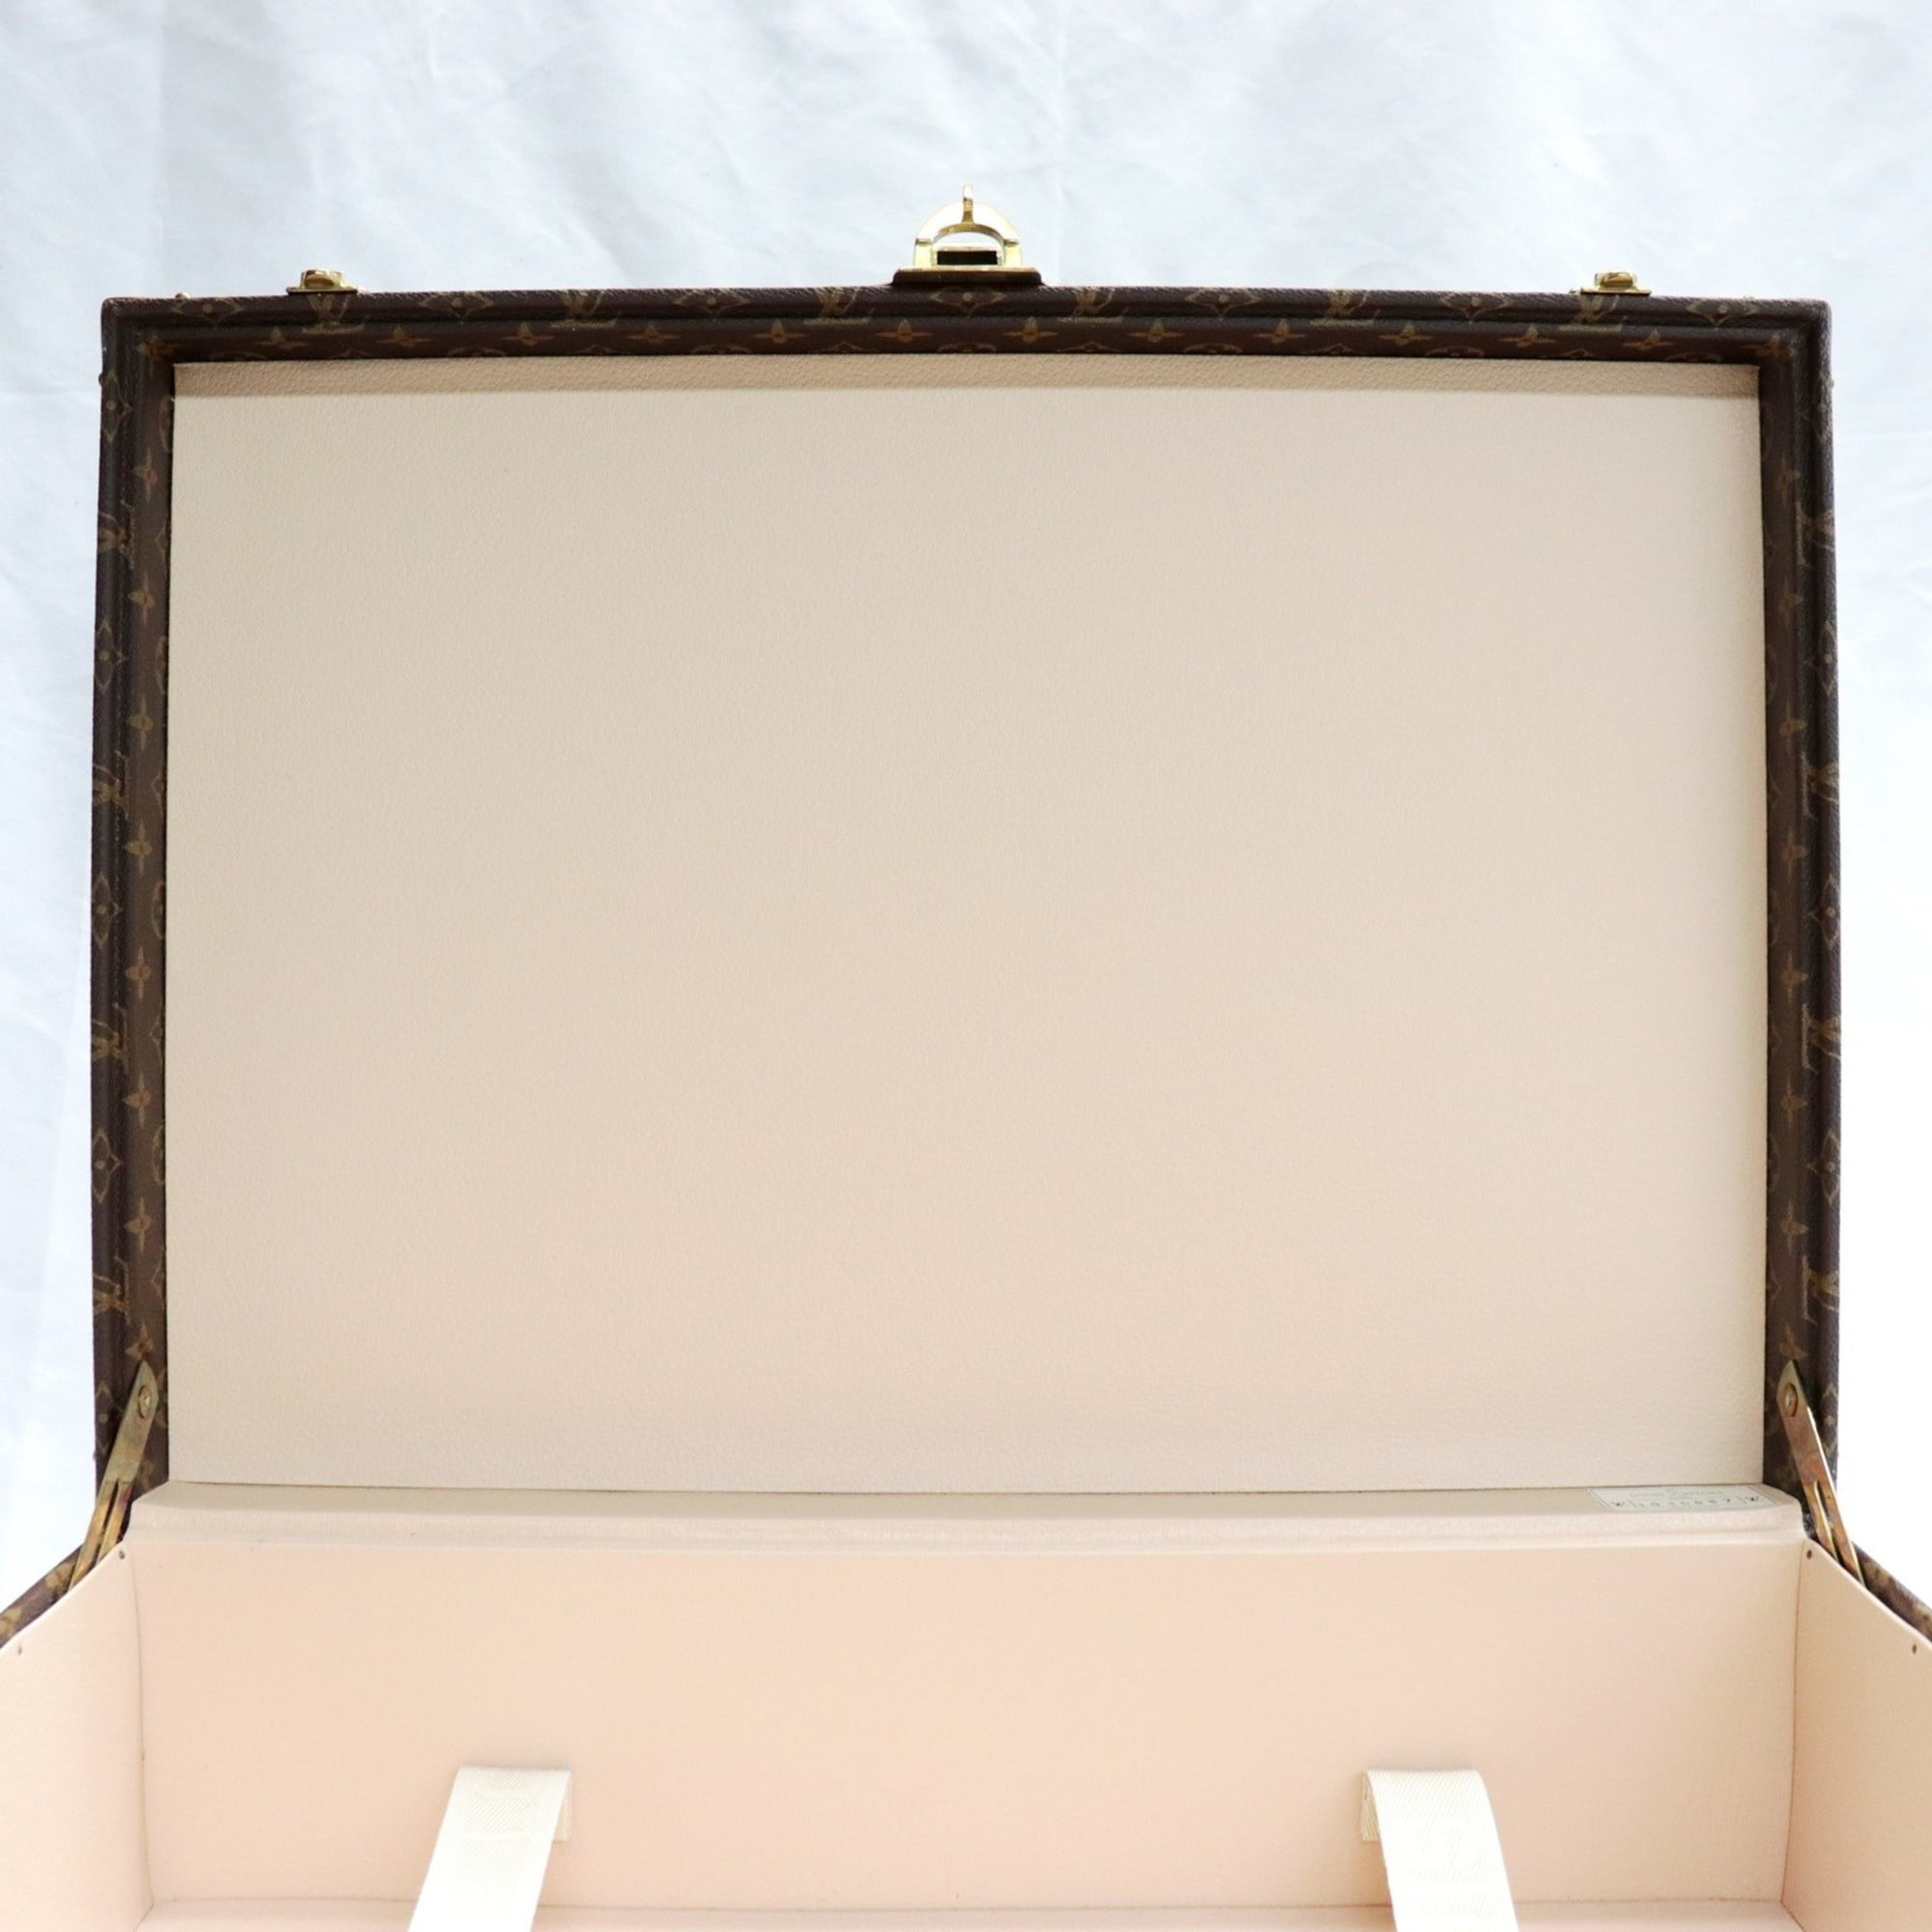 Louis Vuitton Monogram Suitecase Bisten 55 M21327 No key - The